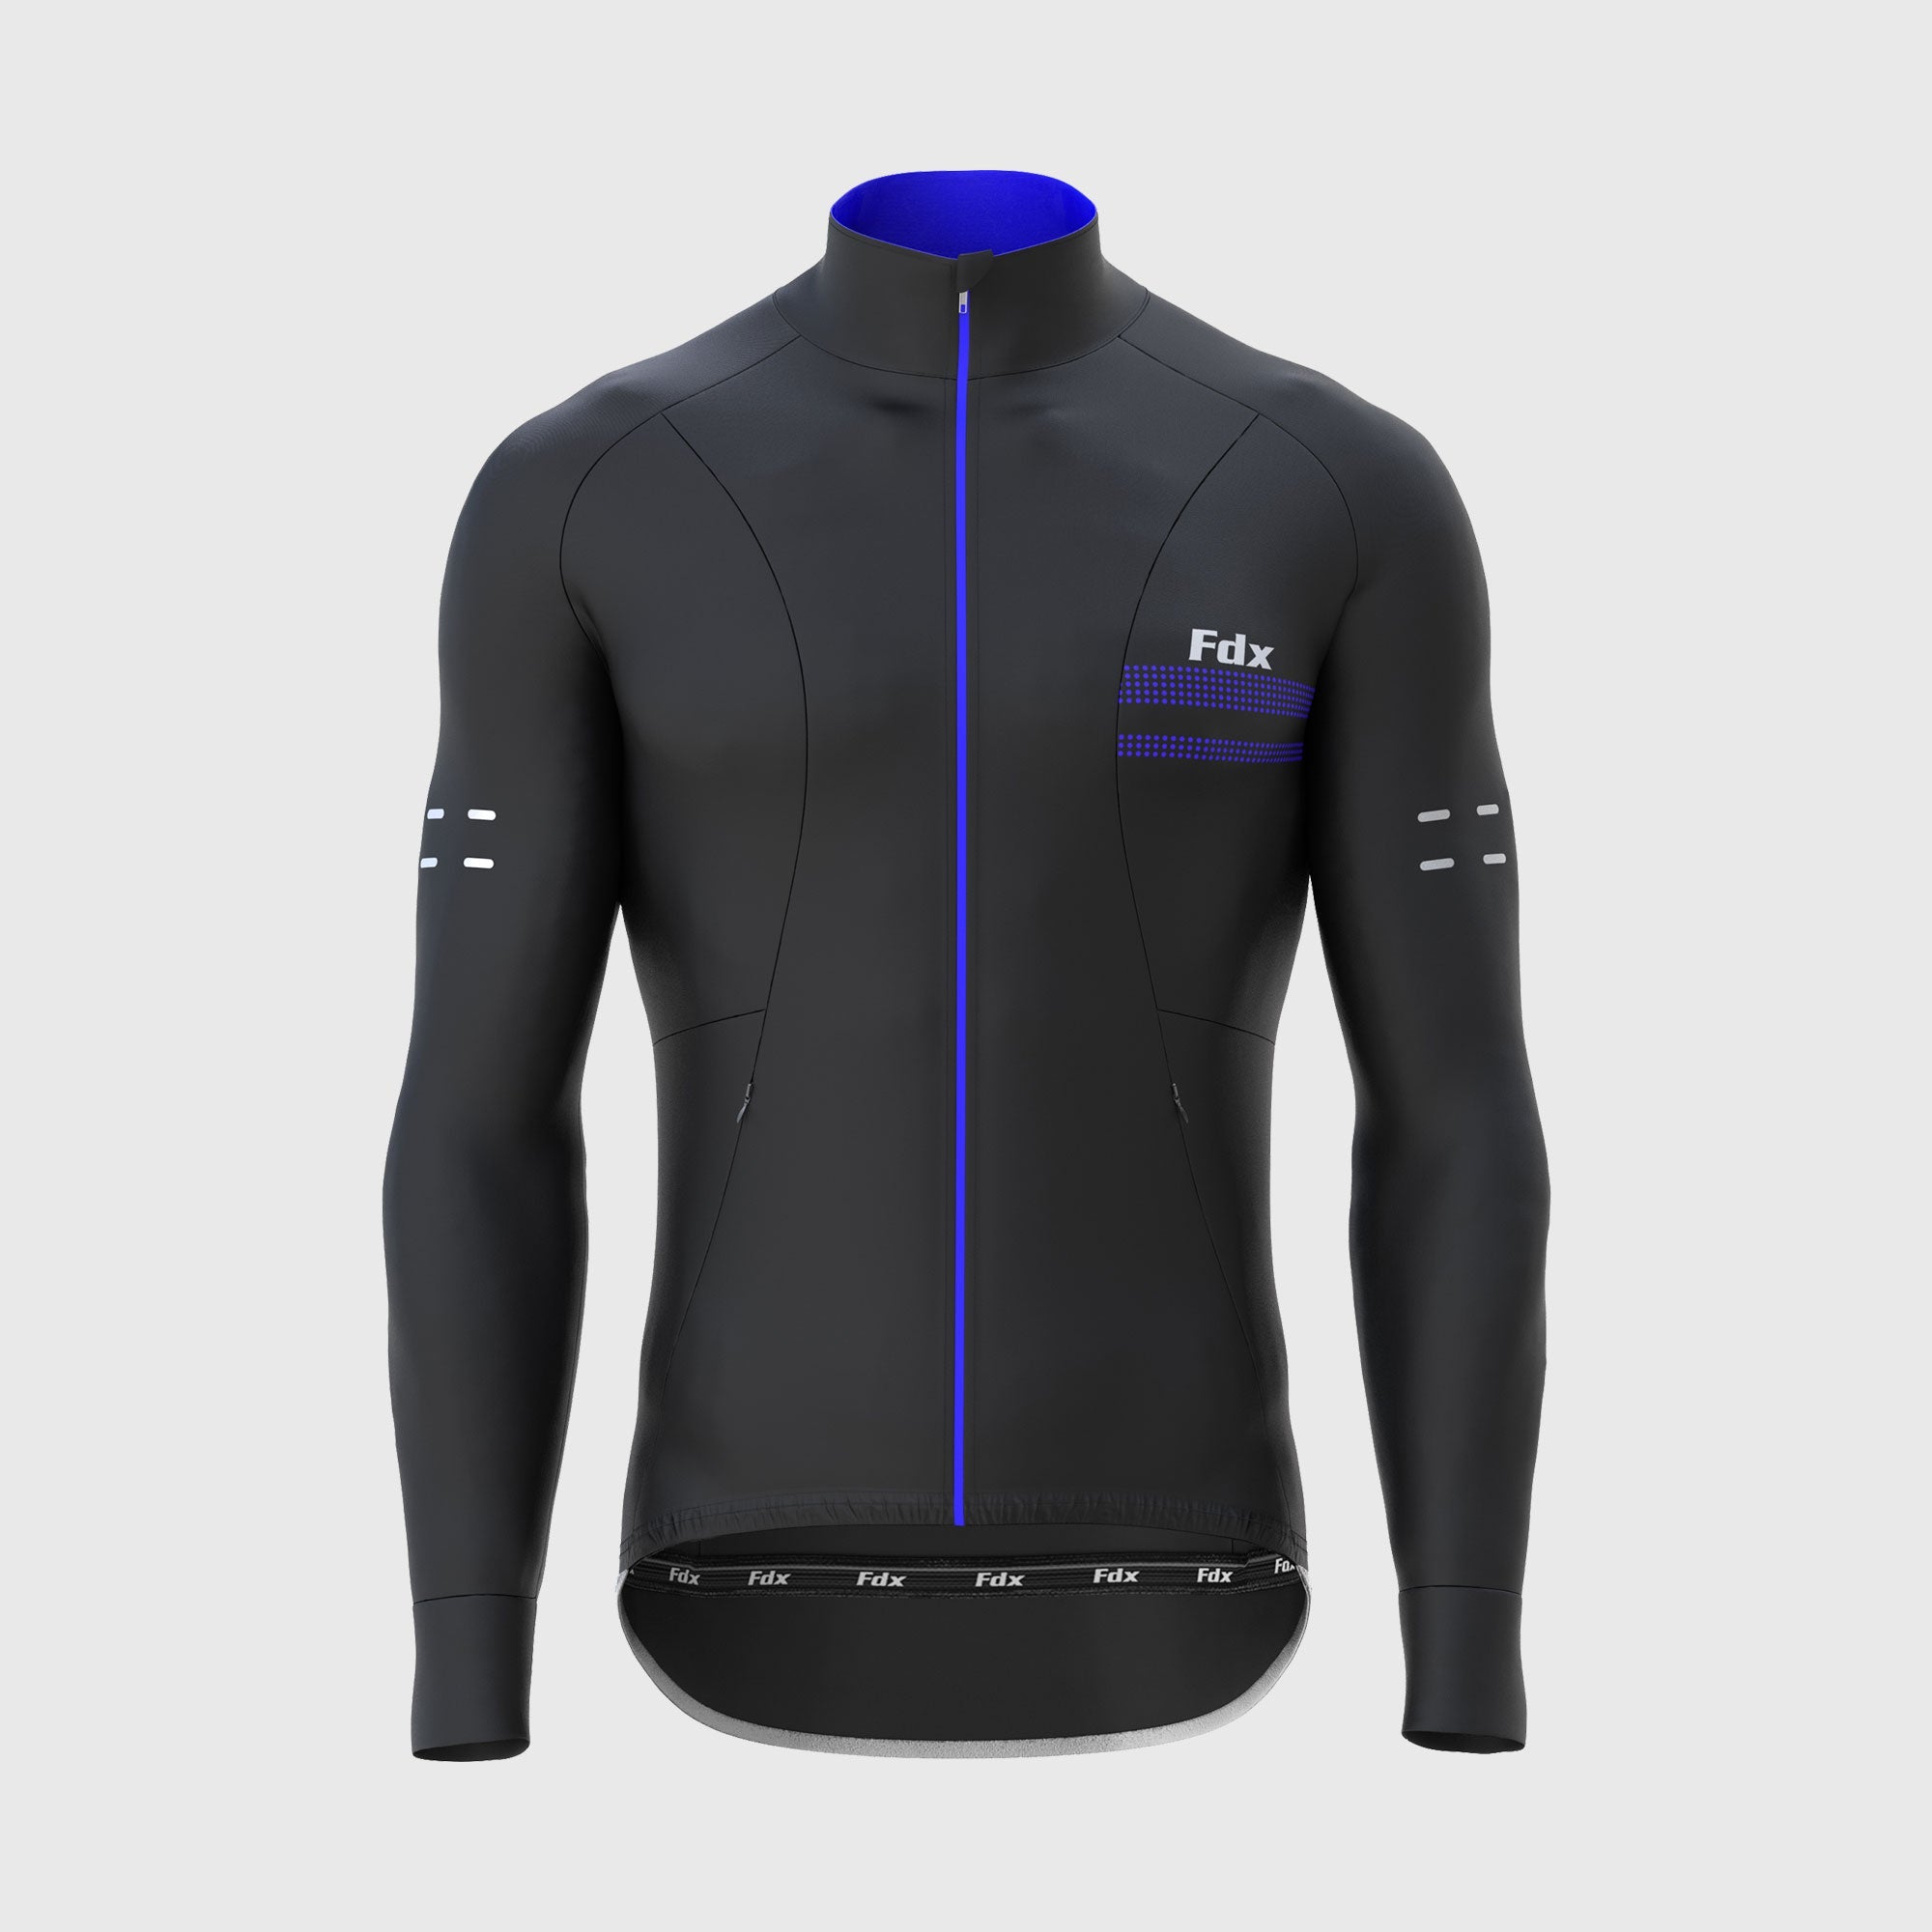 Fdx Blue Warm Cycling Jersey for MensBlack for Winter Roubaix Thermal Fleece Road Bike Wear Top Full Zipper, Pockets & Hi-viz Reflectors - Arch